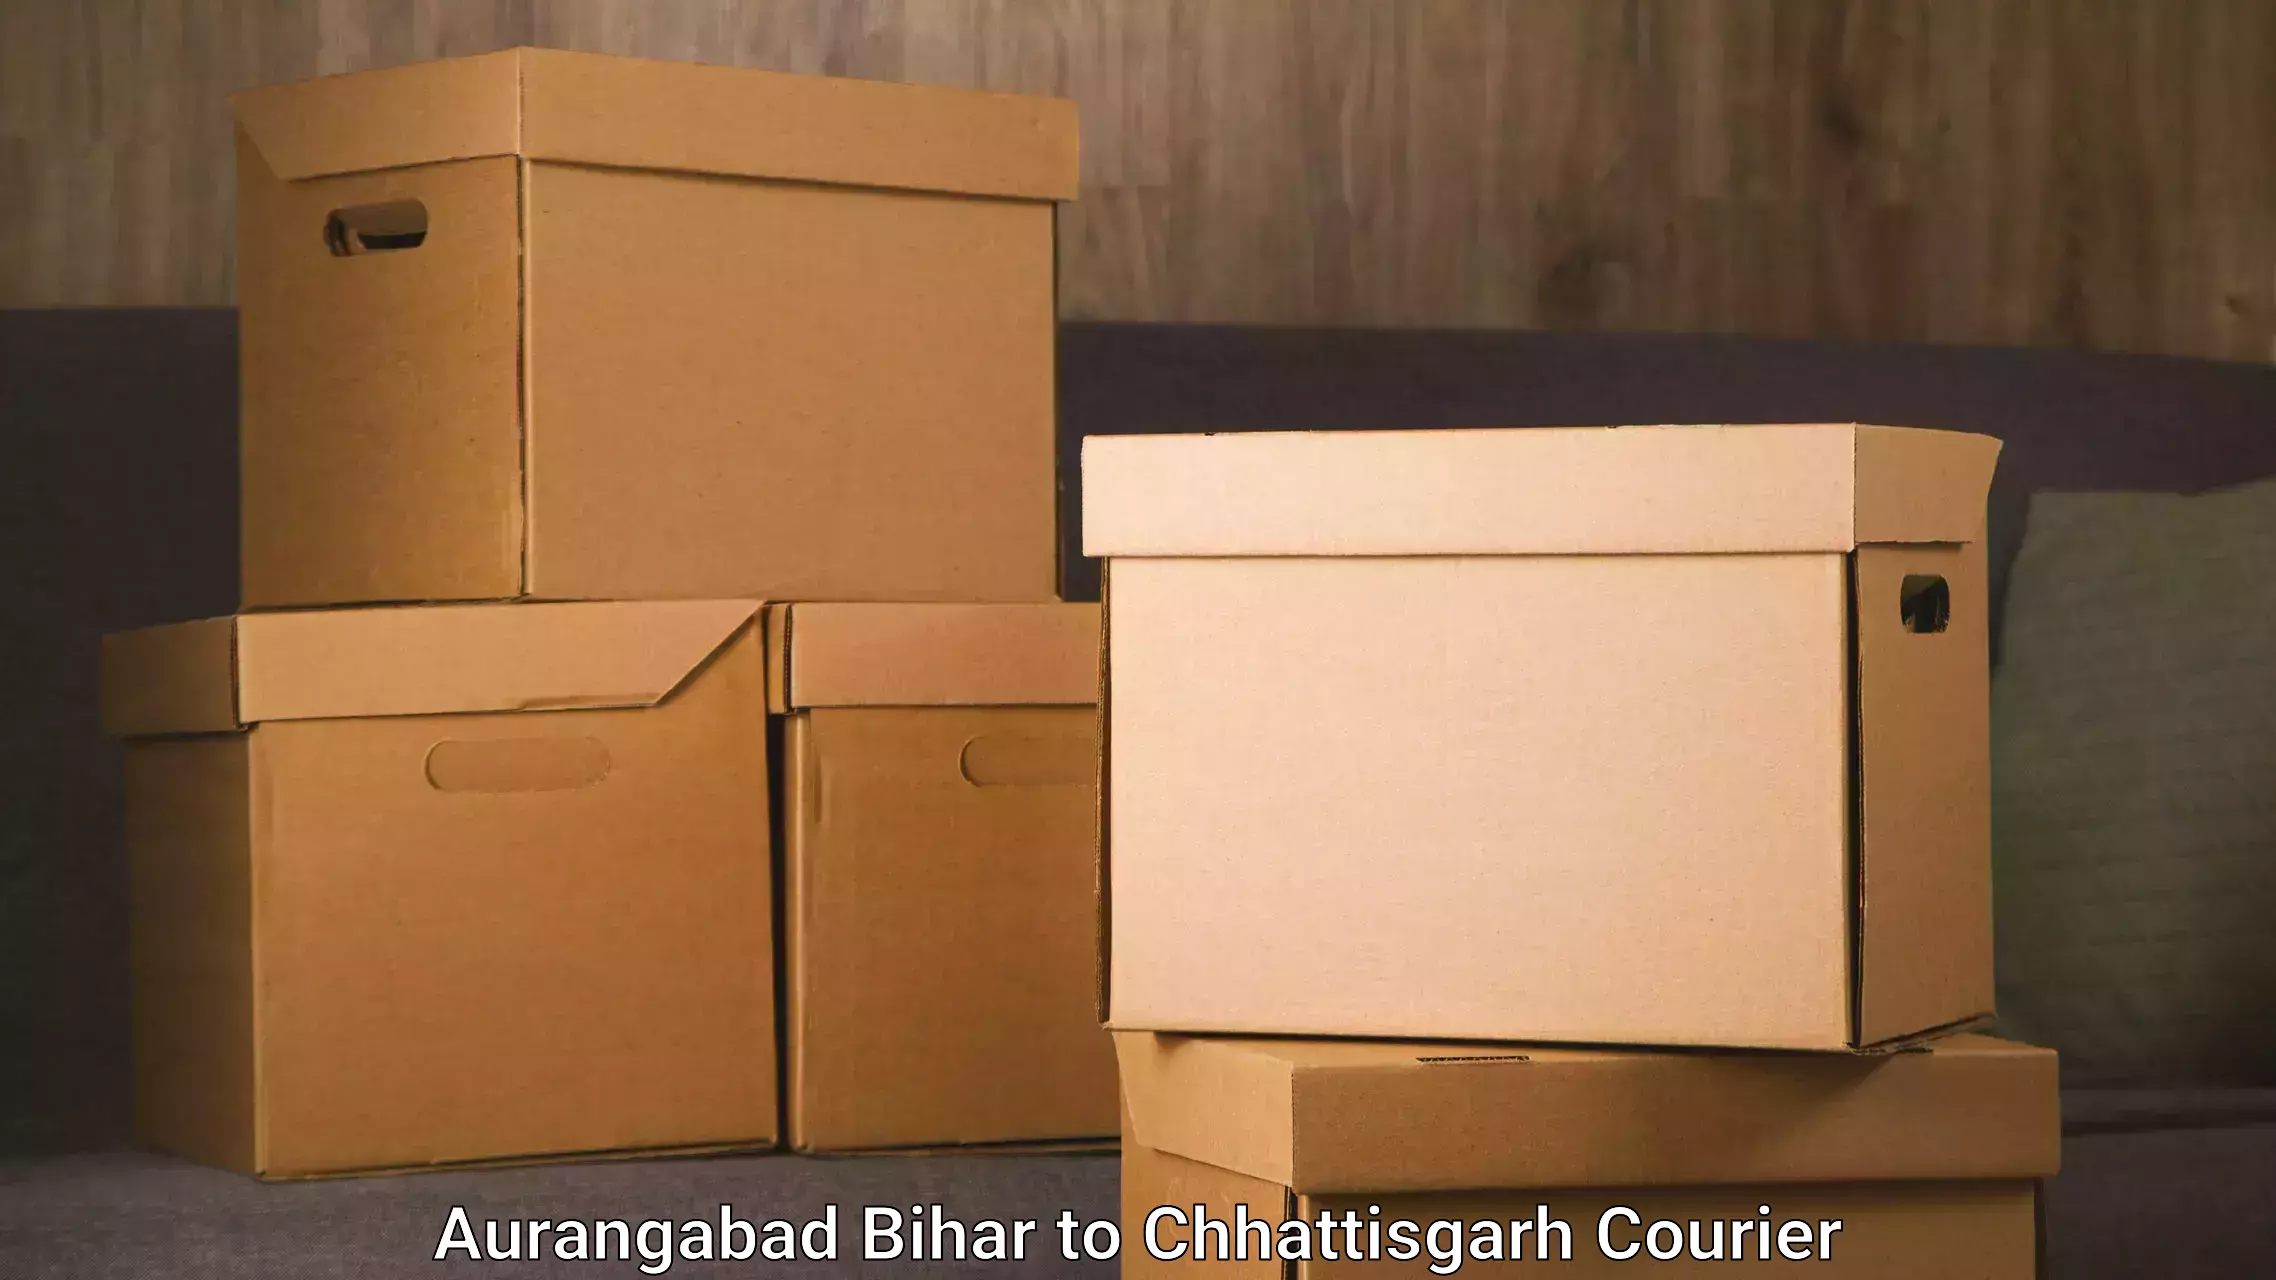 Moving service excellence Aurangabad Bihar to Ambikapur